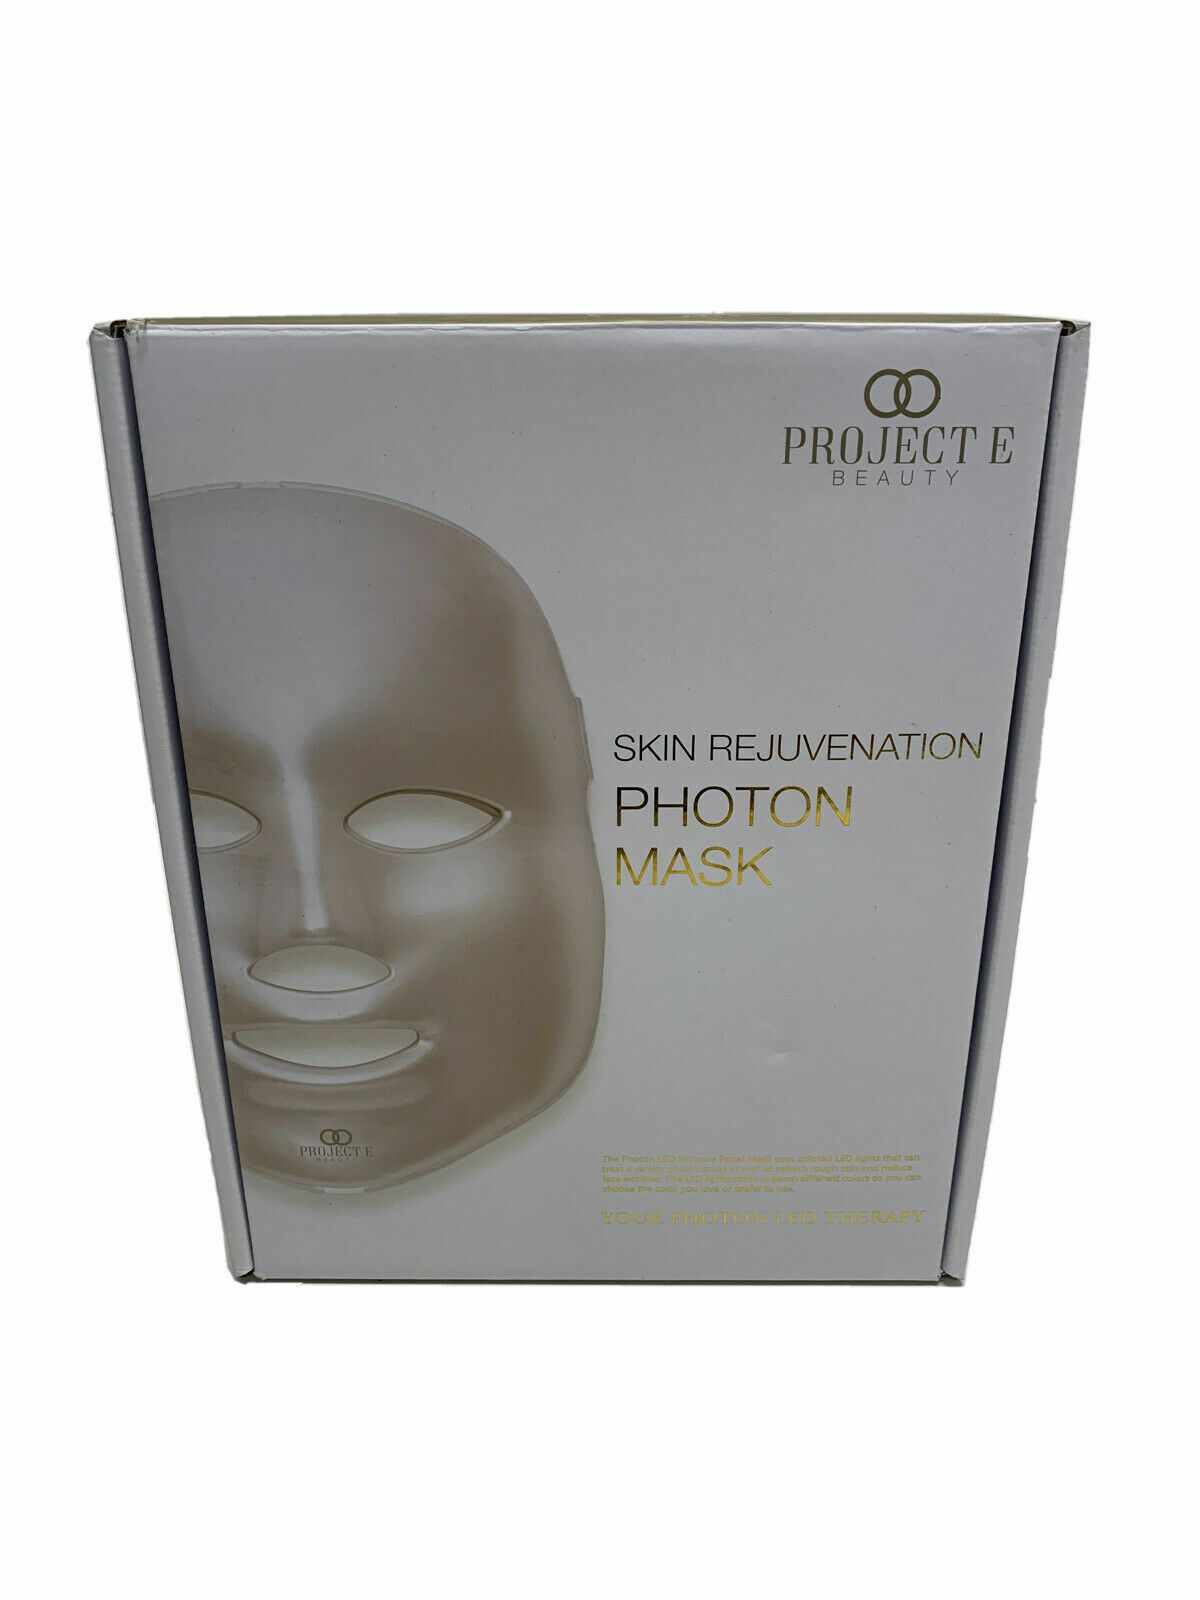 Project Skin Rejuvenation Photon Mask | eBay